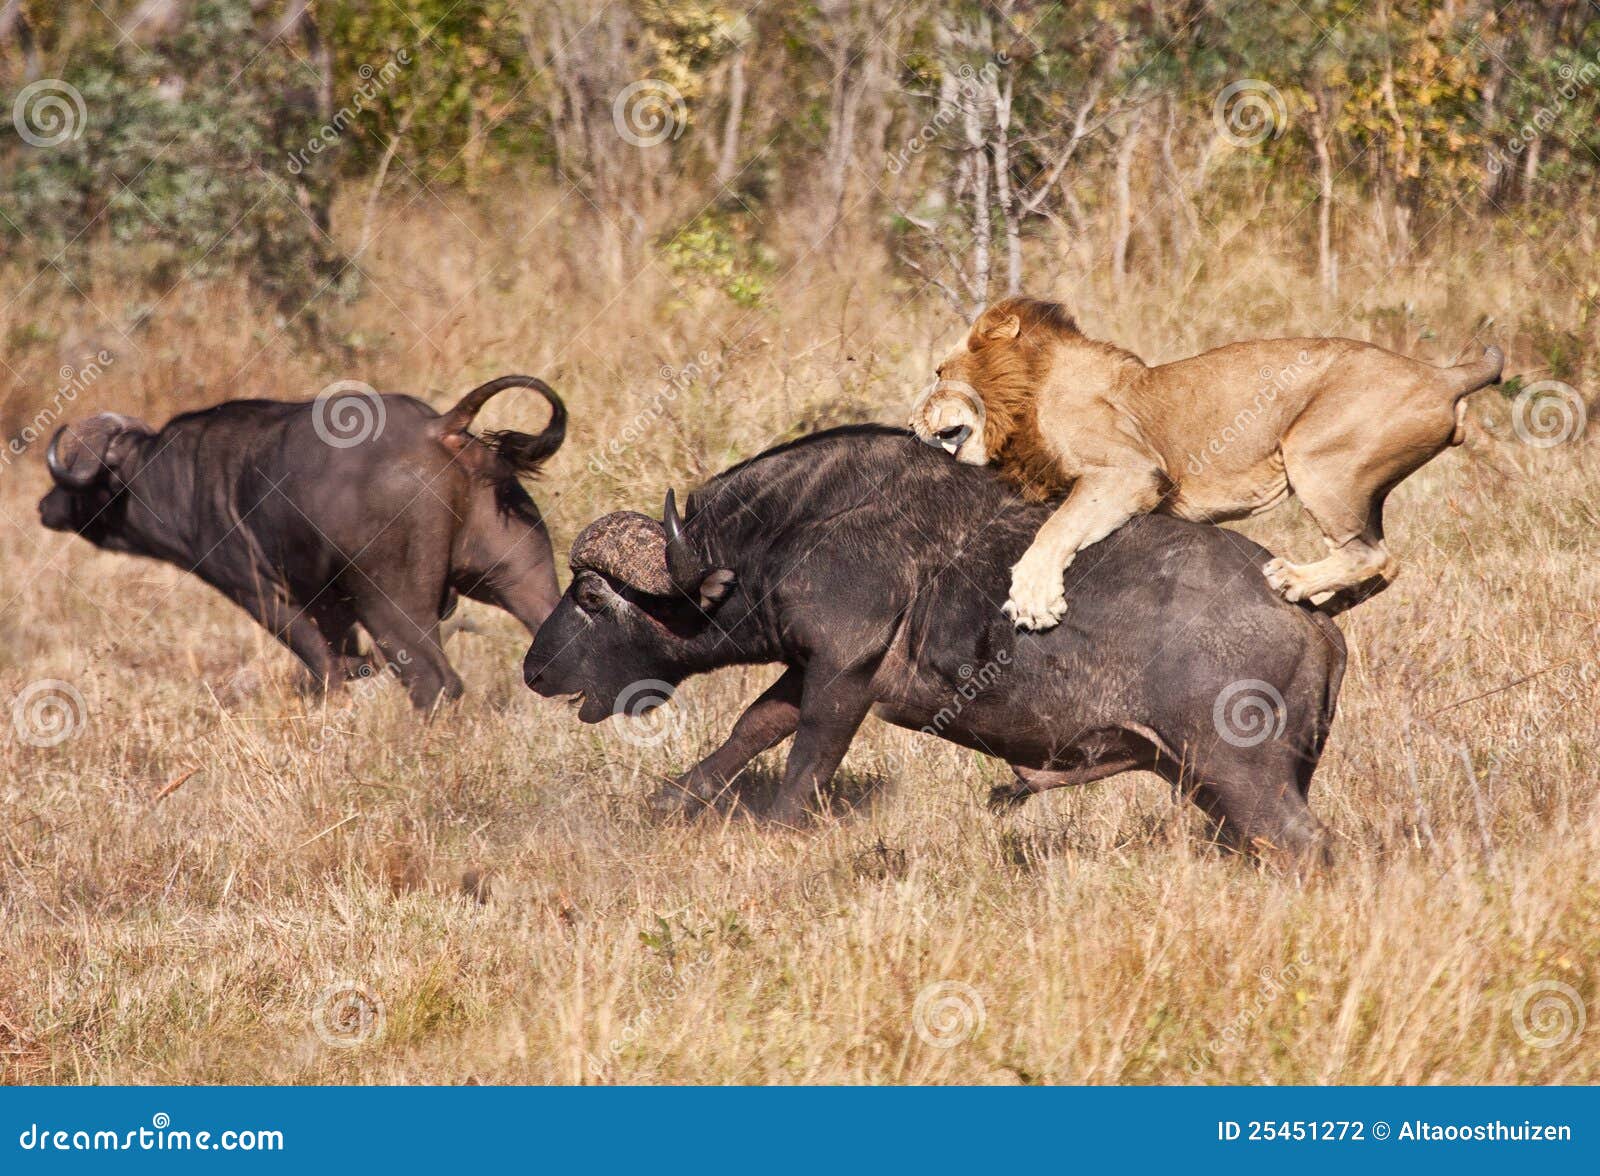 http://thumbs.dreamstime.com/z/male-lion-attack-huge-buffalo-bull-25451272.jpg